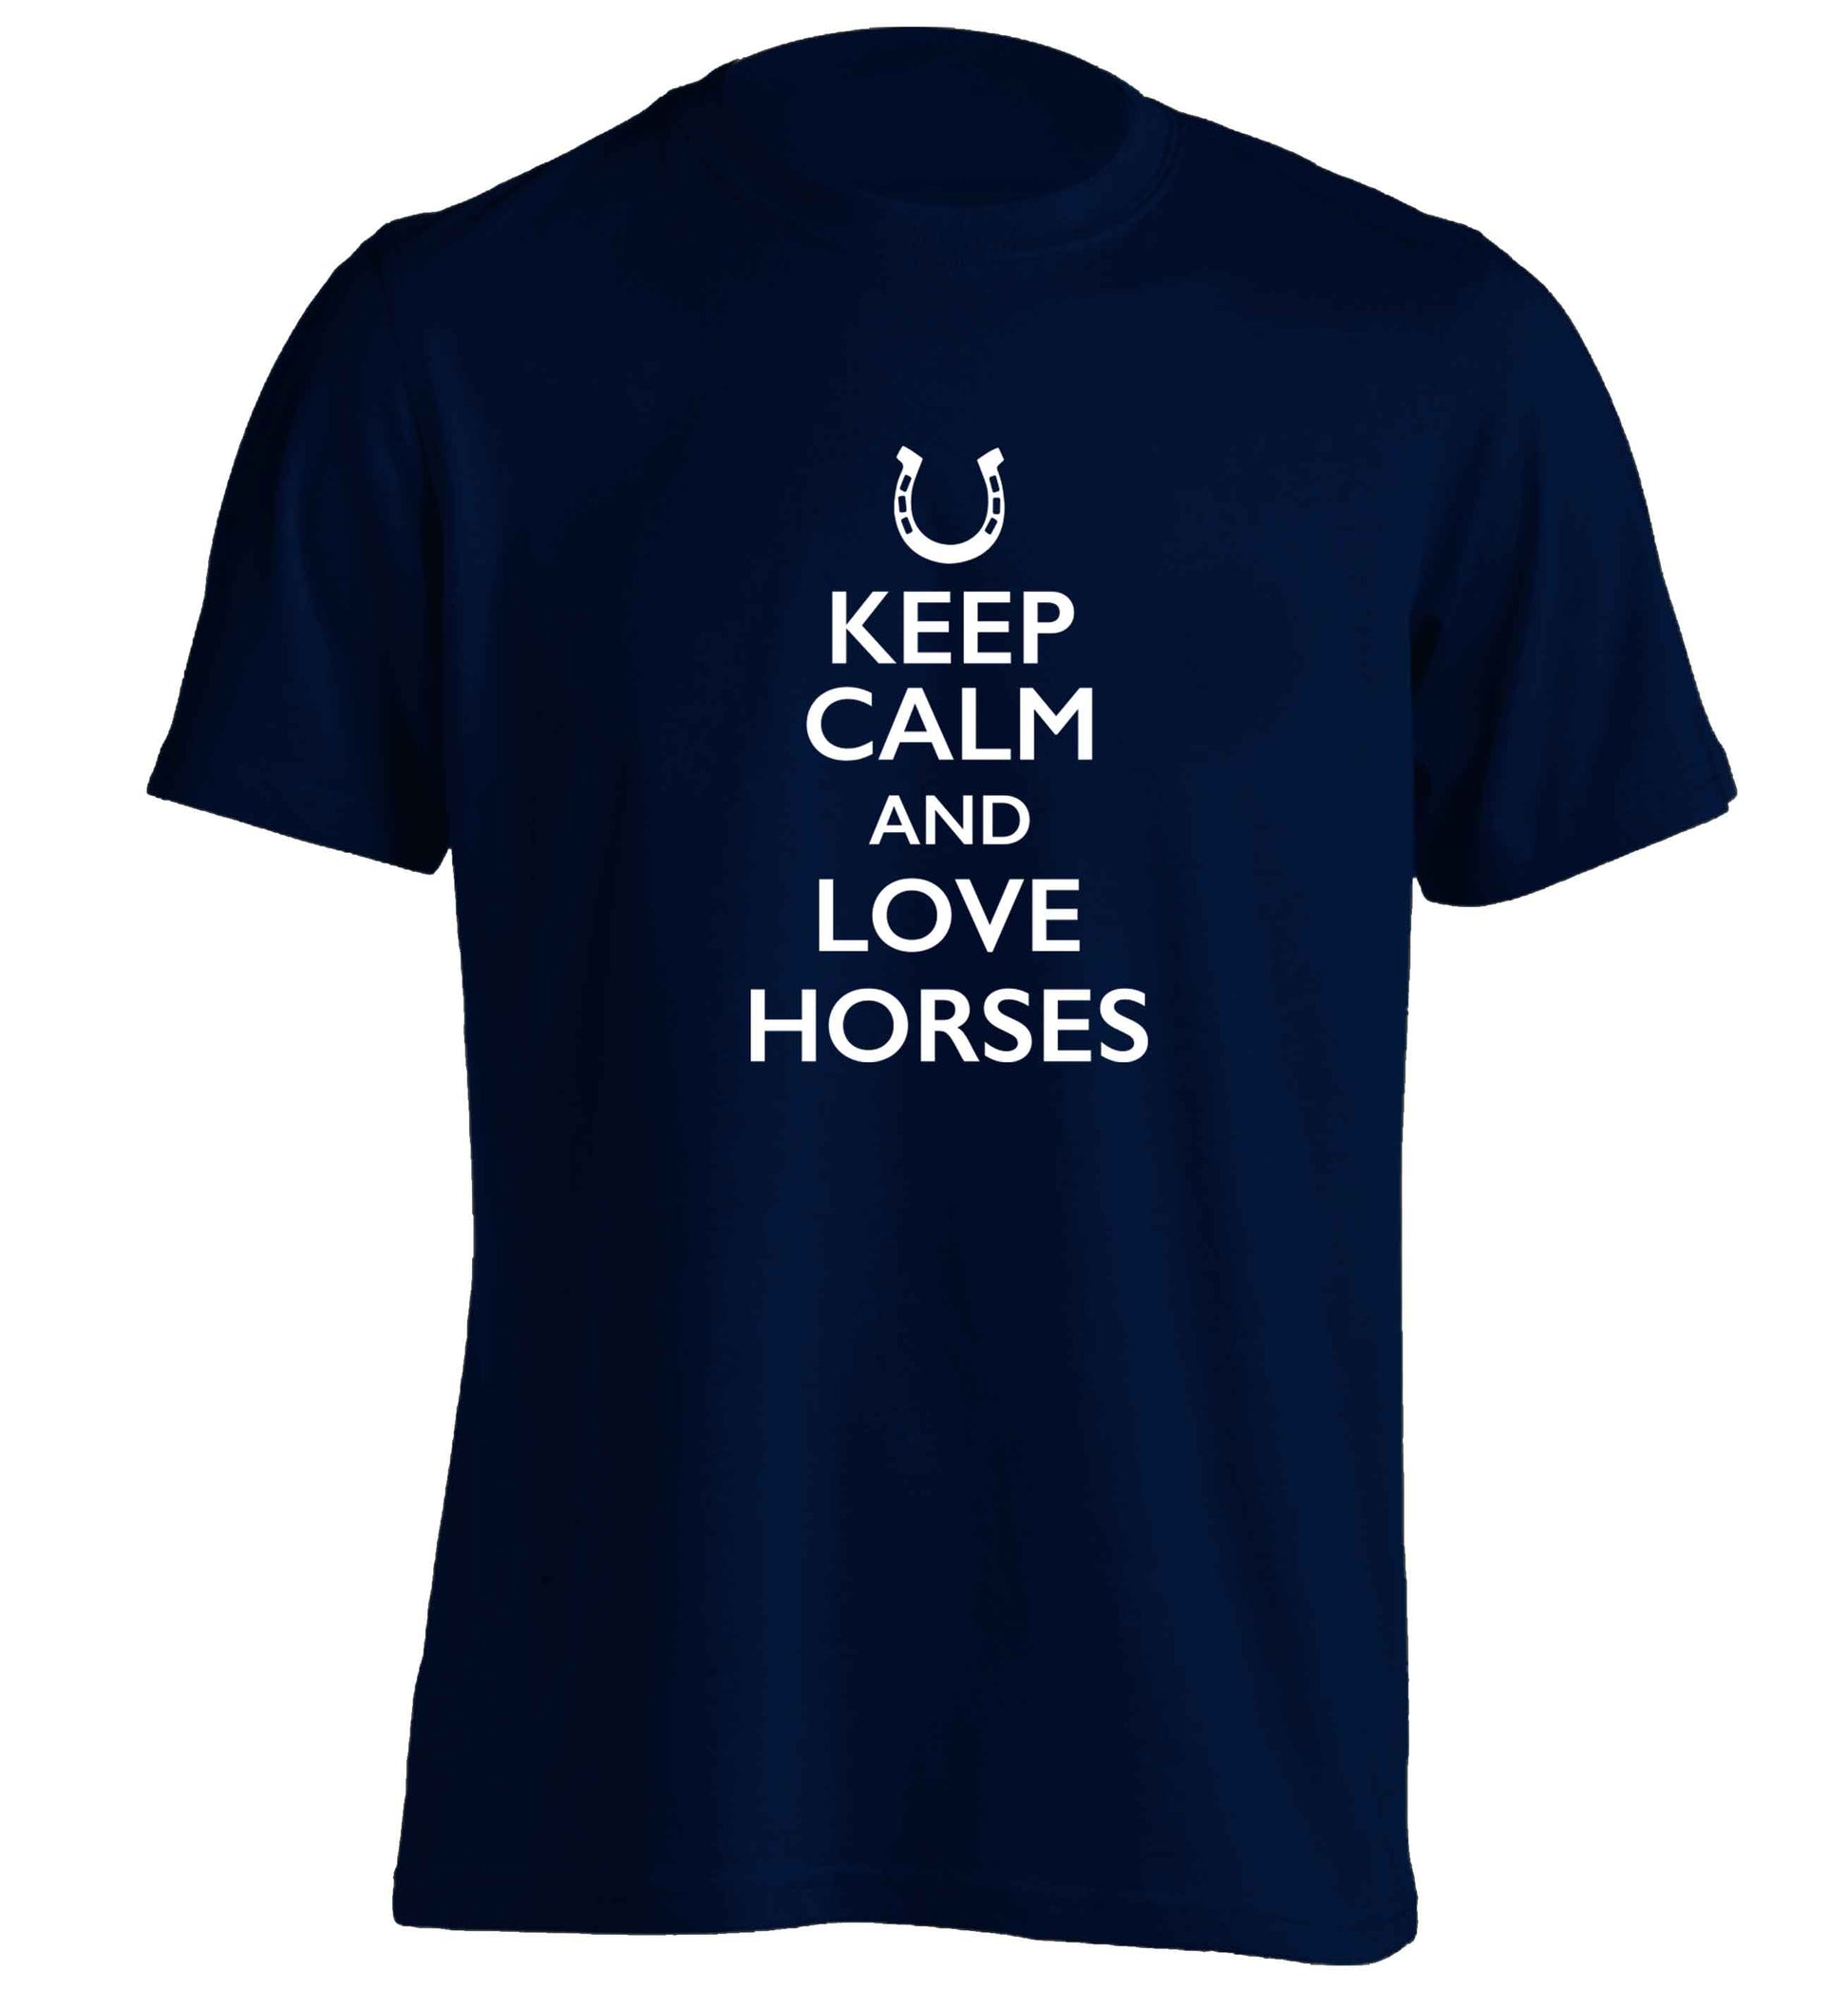 Keep calm and love horses adults unisex navy Tshirt 2XL